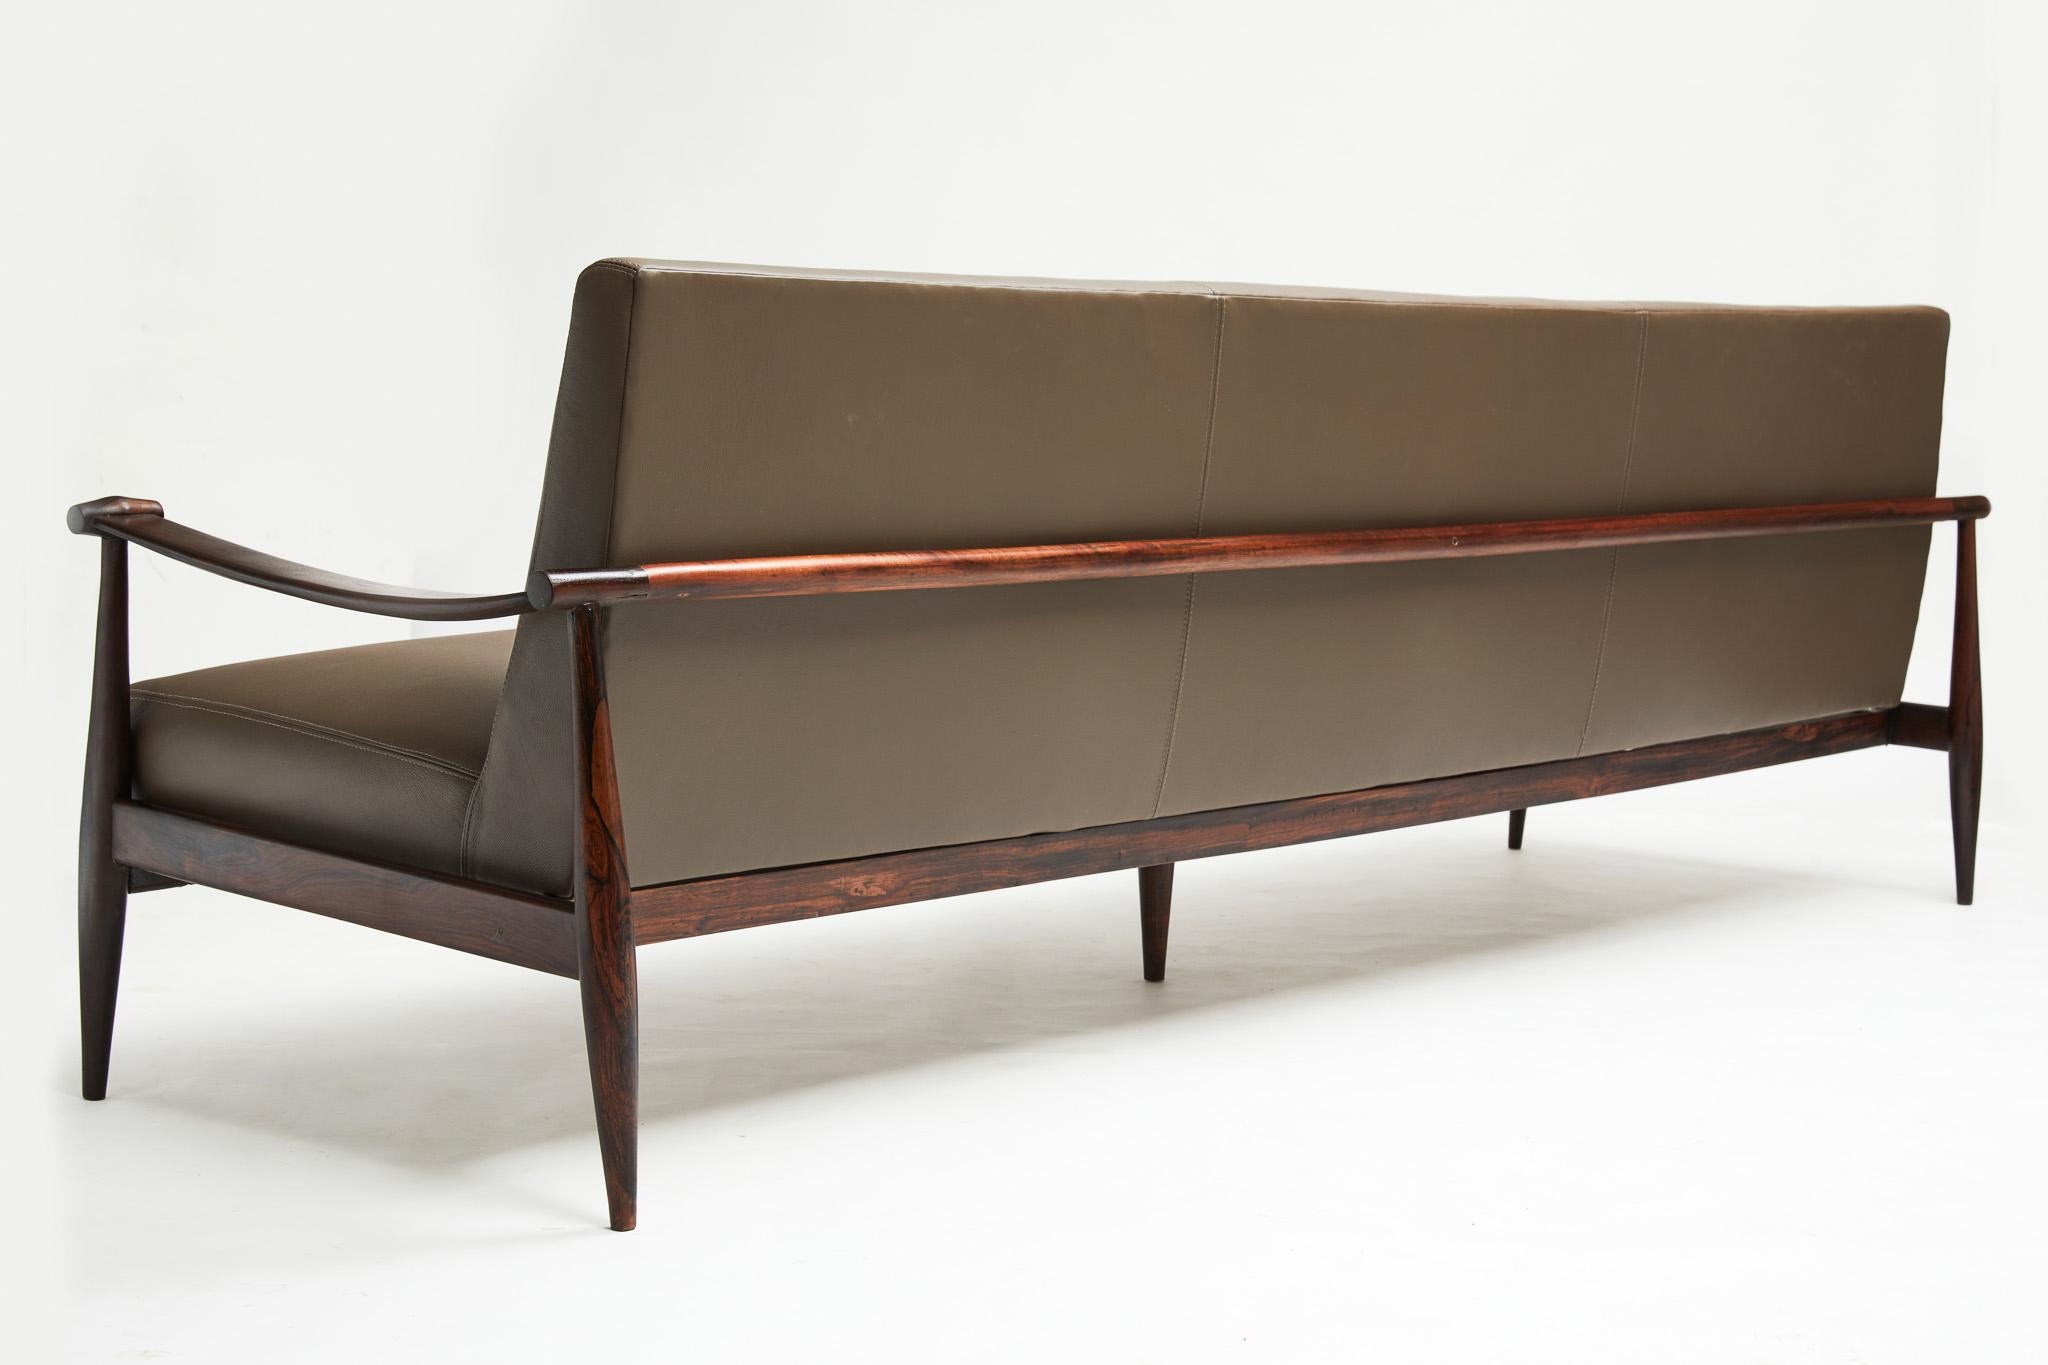 20th Century Brazilian Modern Sofa in Hardwood & Brown Leather by Liceu De Artes 1960 For Sale